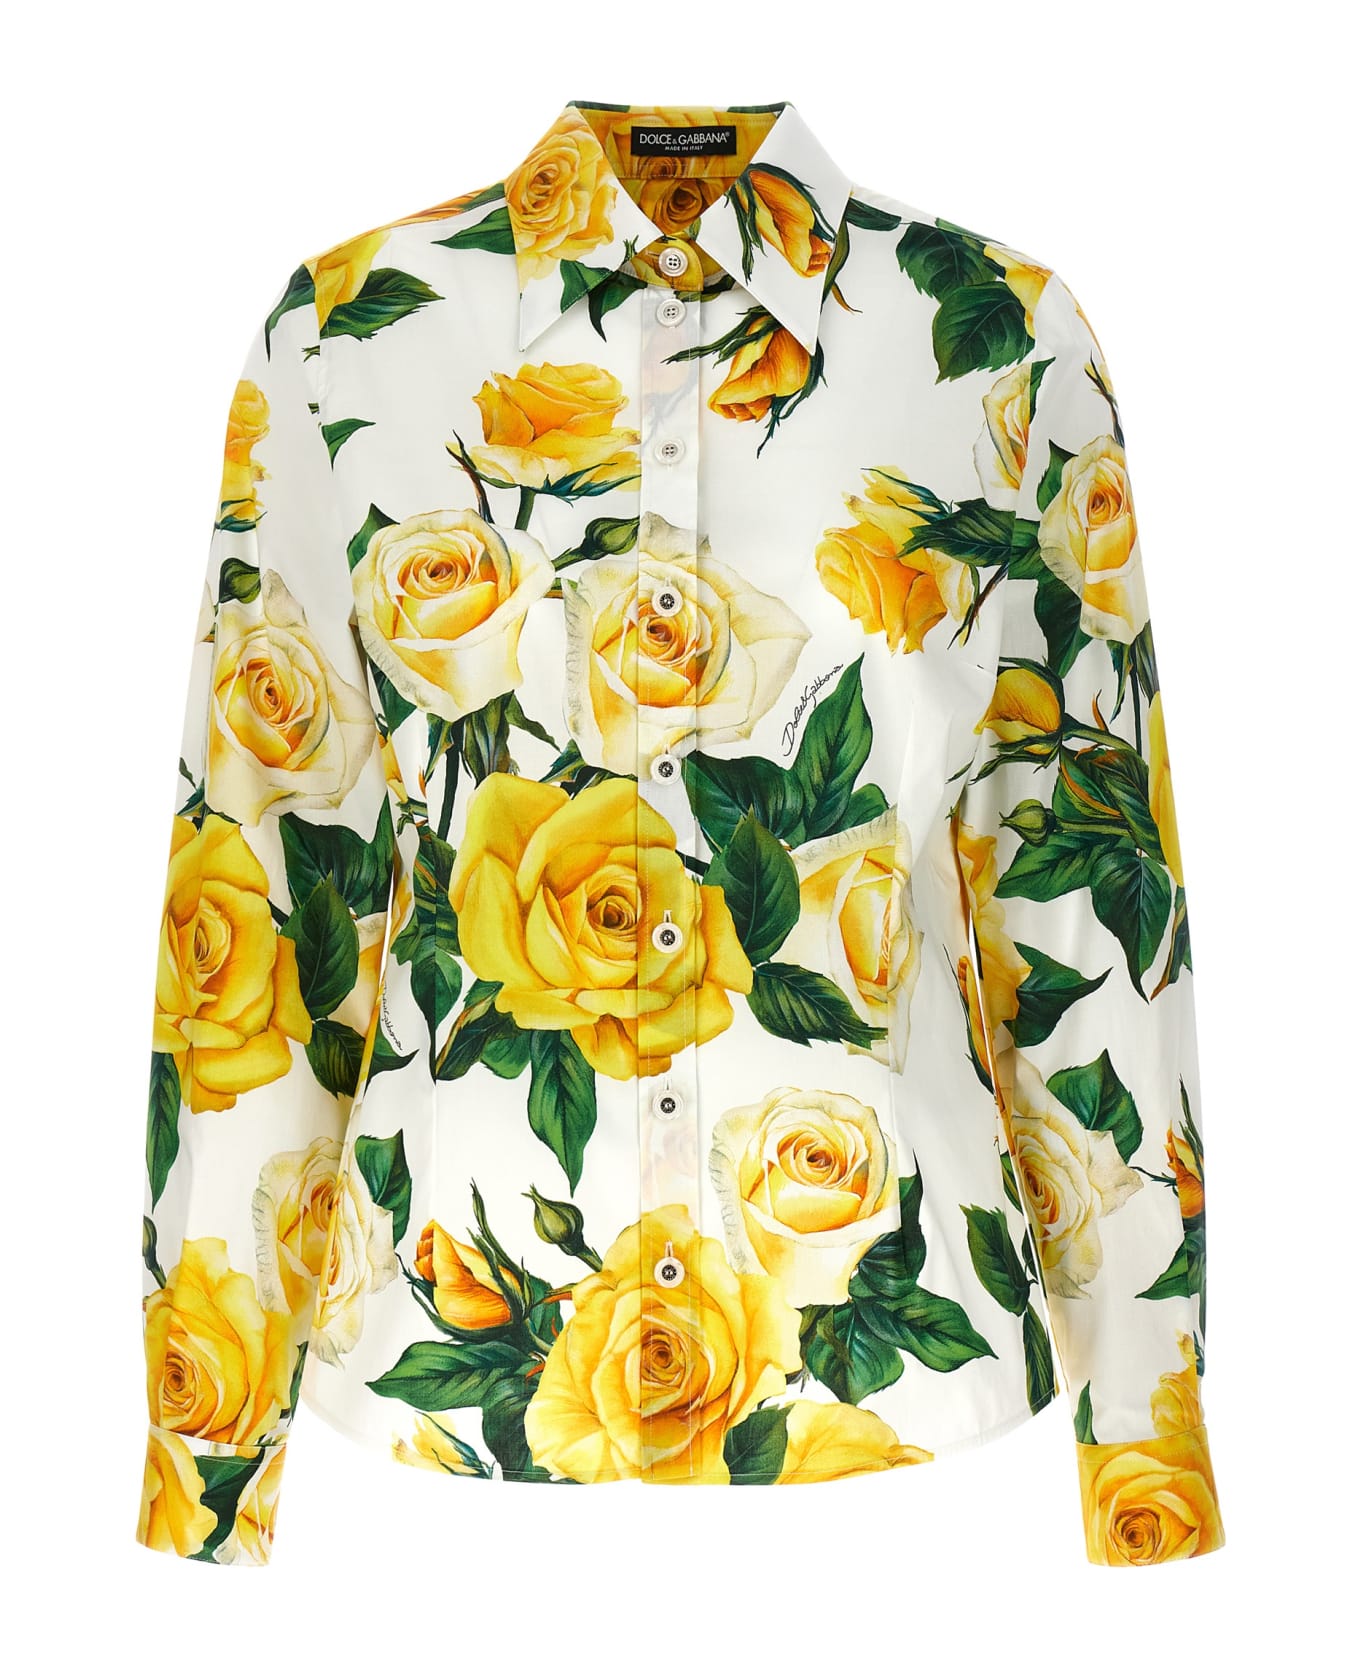 Dolce & Gabbana Rose Gialle Shirt - Vo Rose Gialle Bianco シャツ